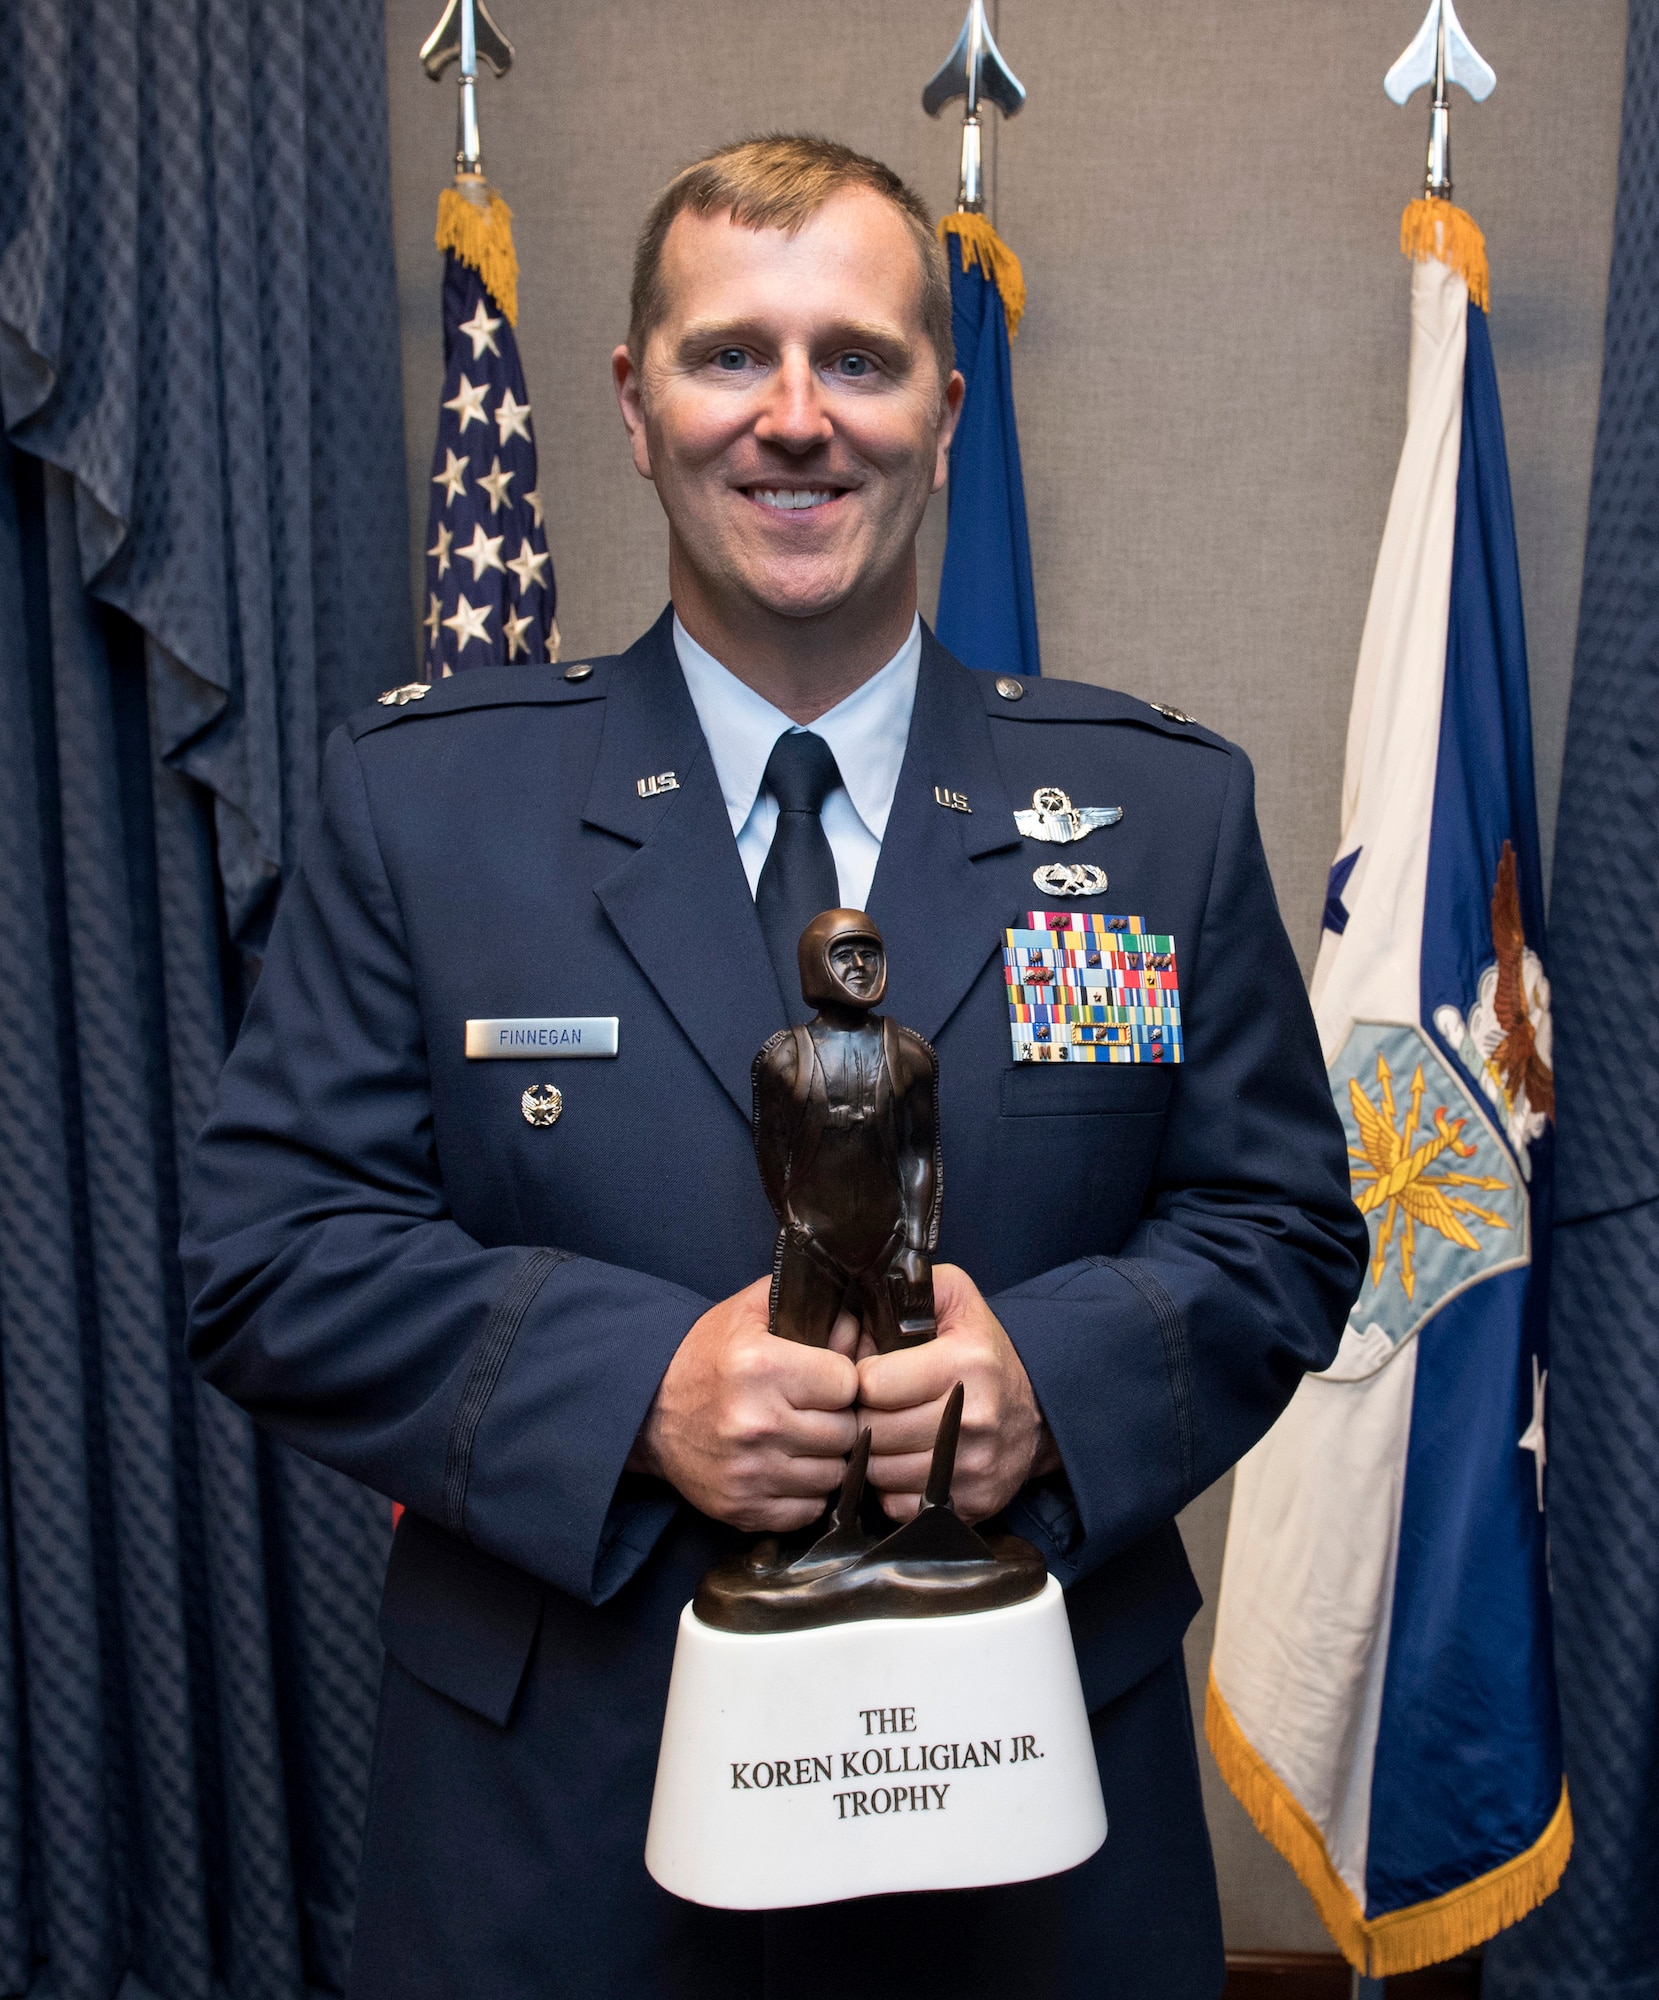 Lt. Col Daniel Finnegan holds the Koren Kolligian Trophy during a ceremony in the Pentagon, Arlington, Va., June 25, 2018. (U.S. Air Force photo by Wayne A. Clark)